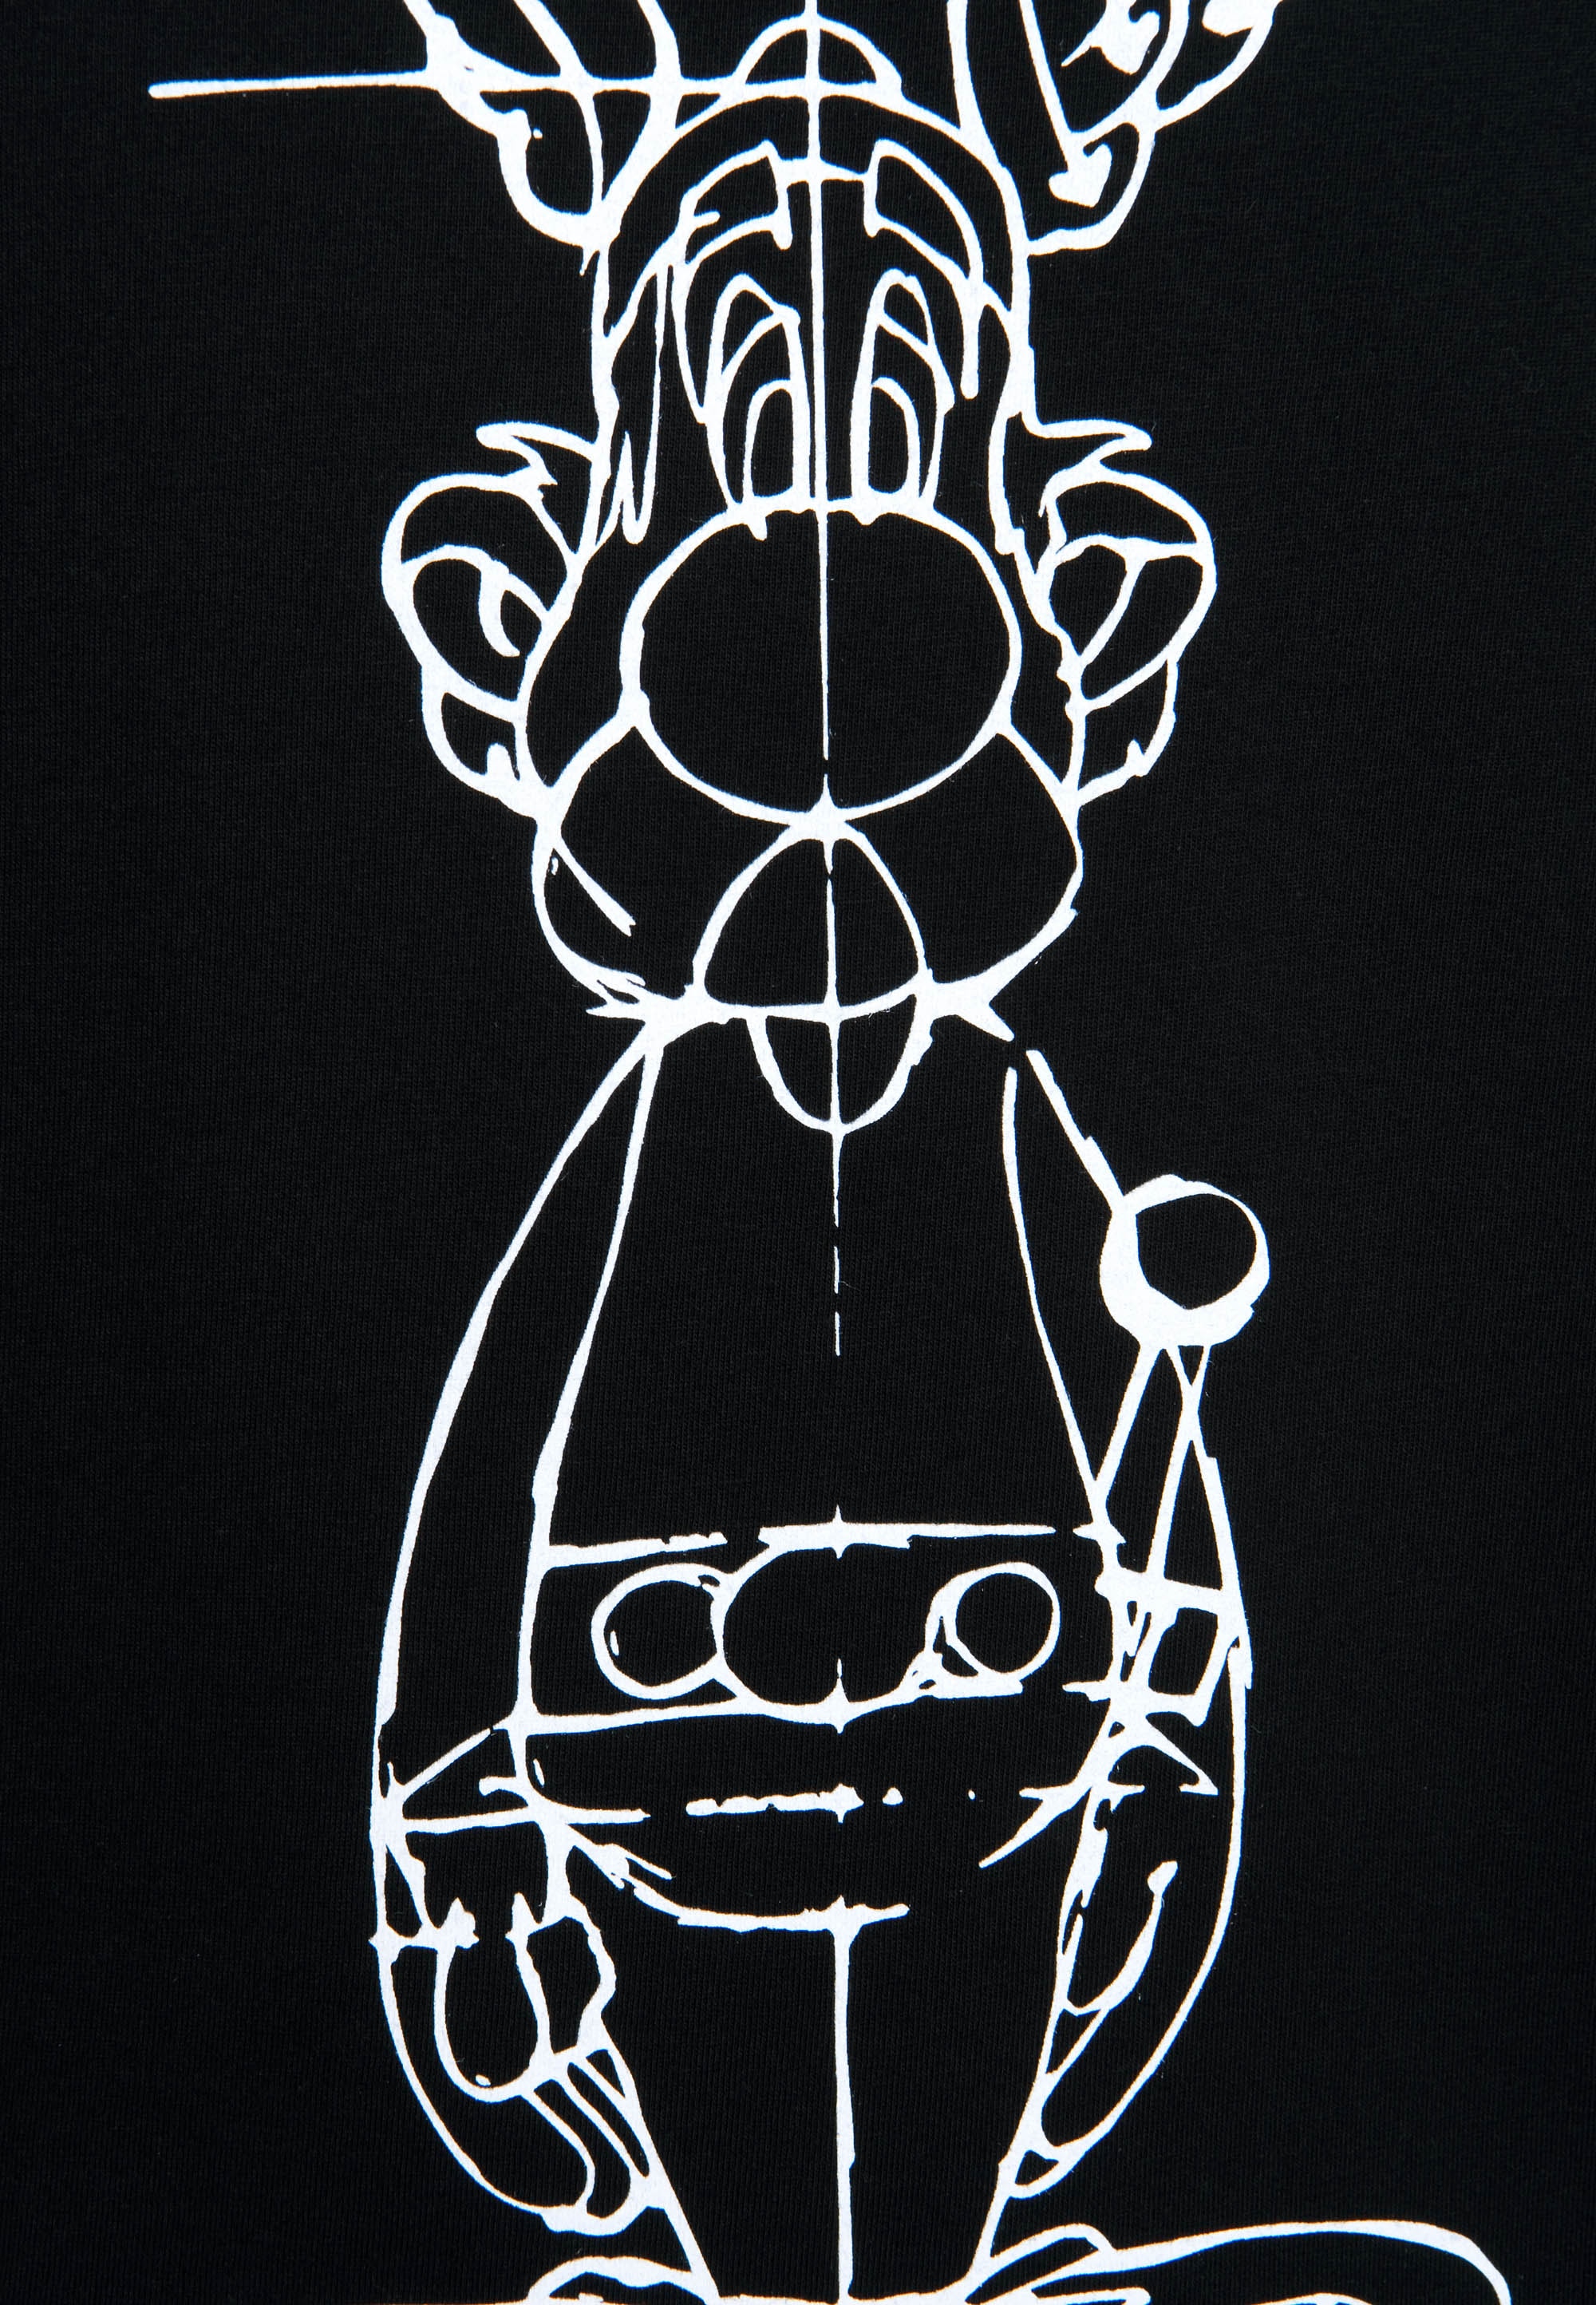 LOGOSHIRT T-Shirt »Asterix der Gallier«, mit lizenzierten Originaldesign